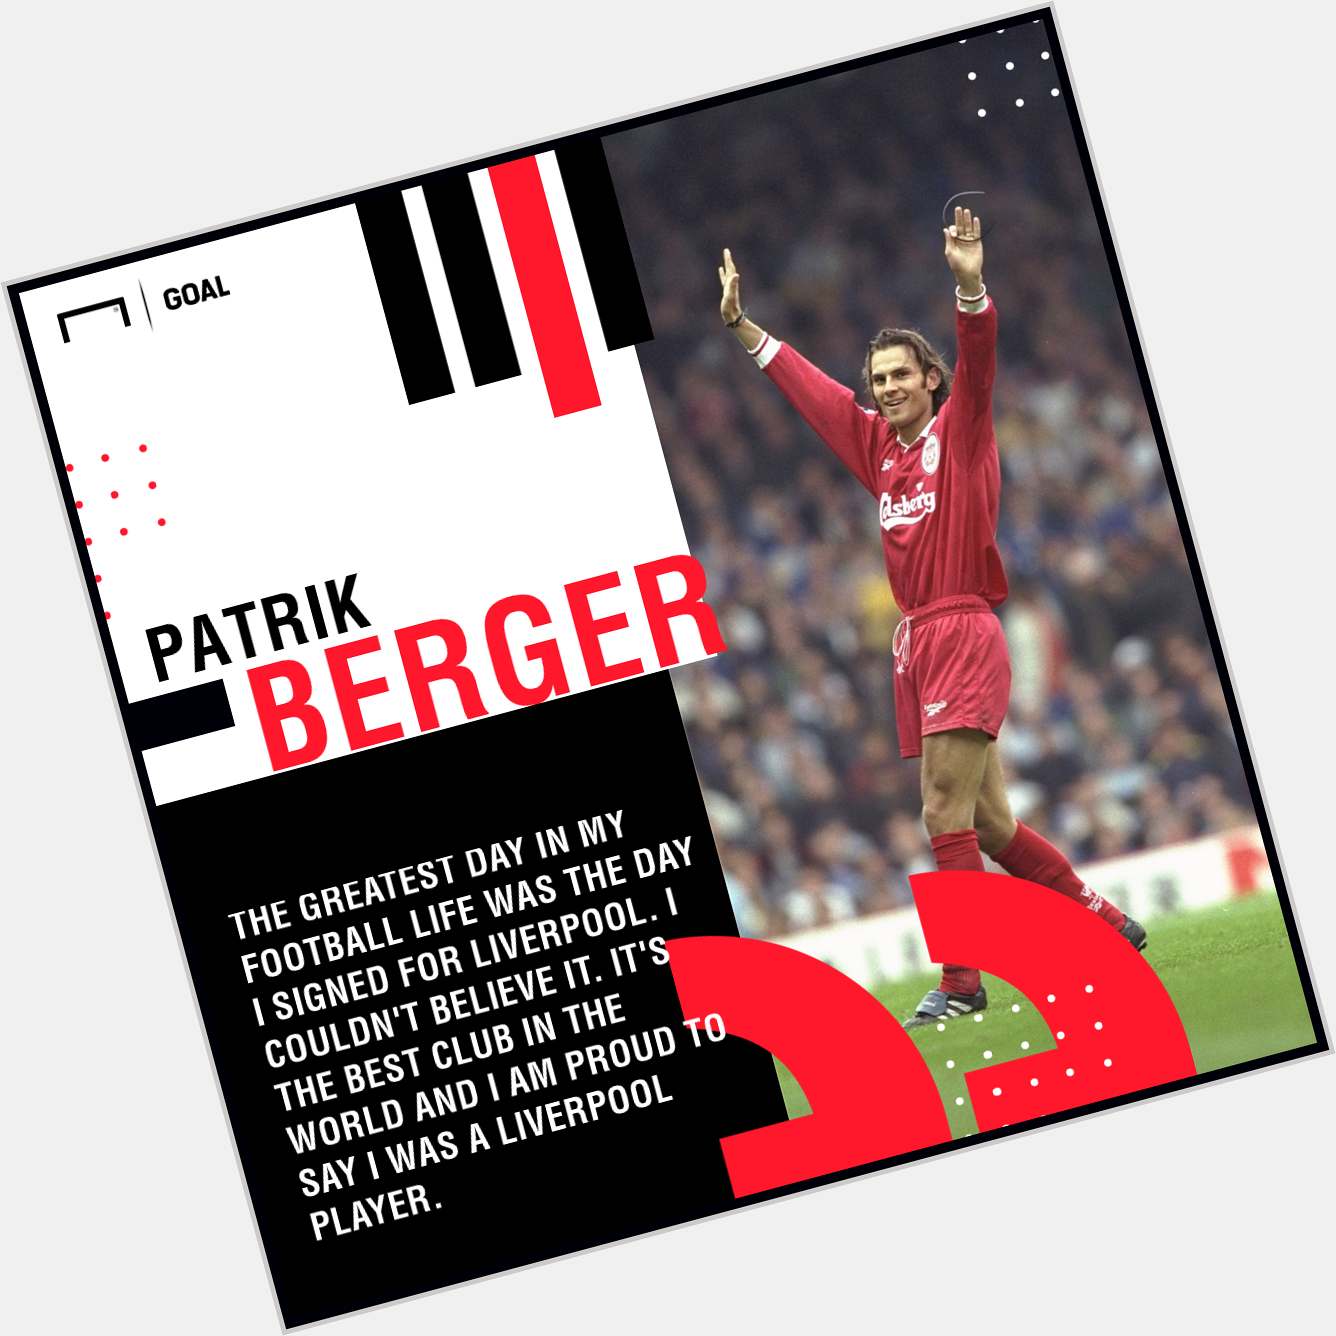 Happy Birthday, Patrik Berger!  195 games  35 goals FA Cup UEFA Cup

A true red.  